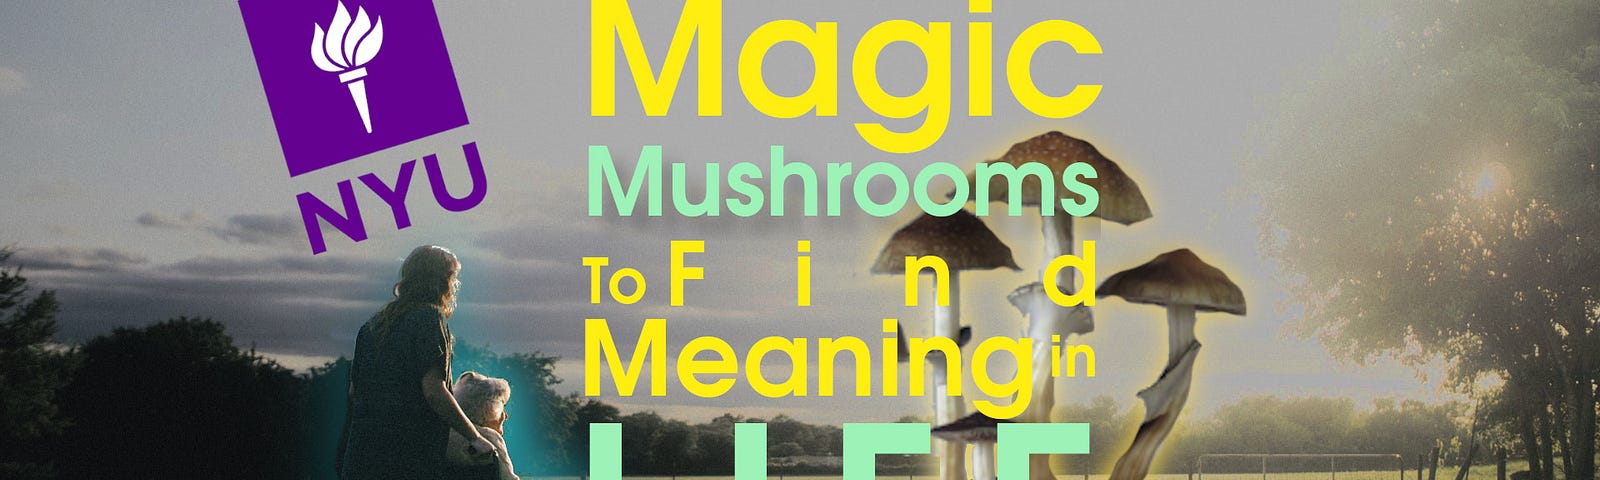 magic mushrooms cancer research nyu